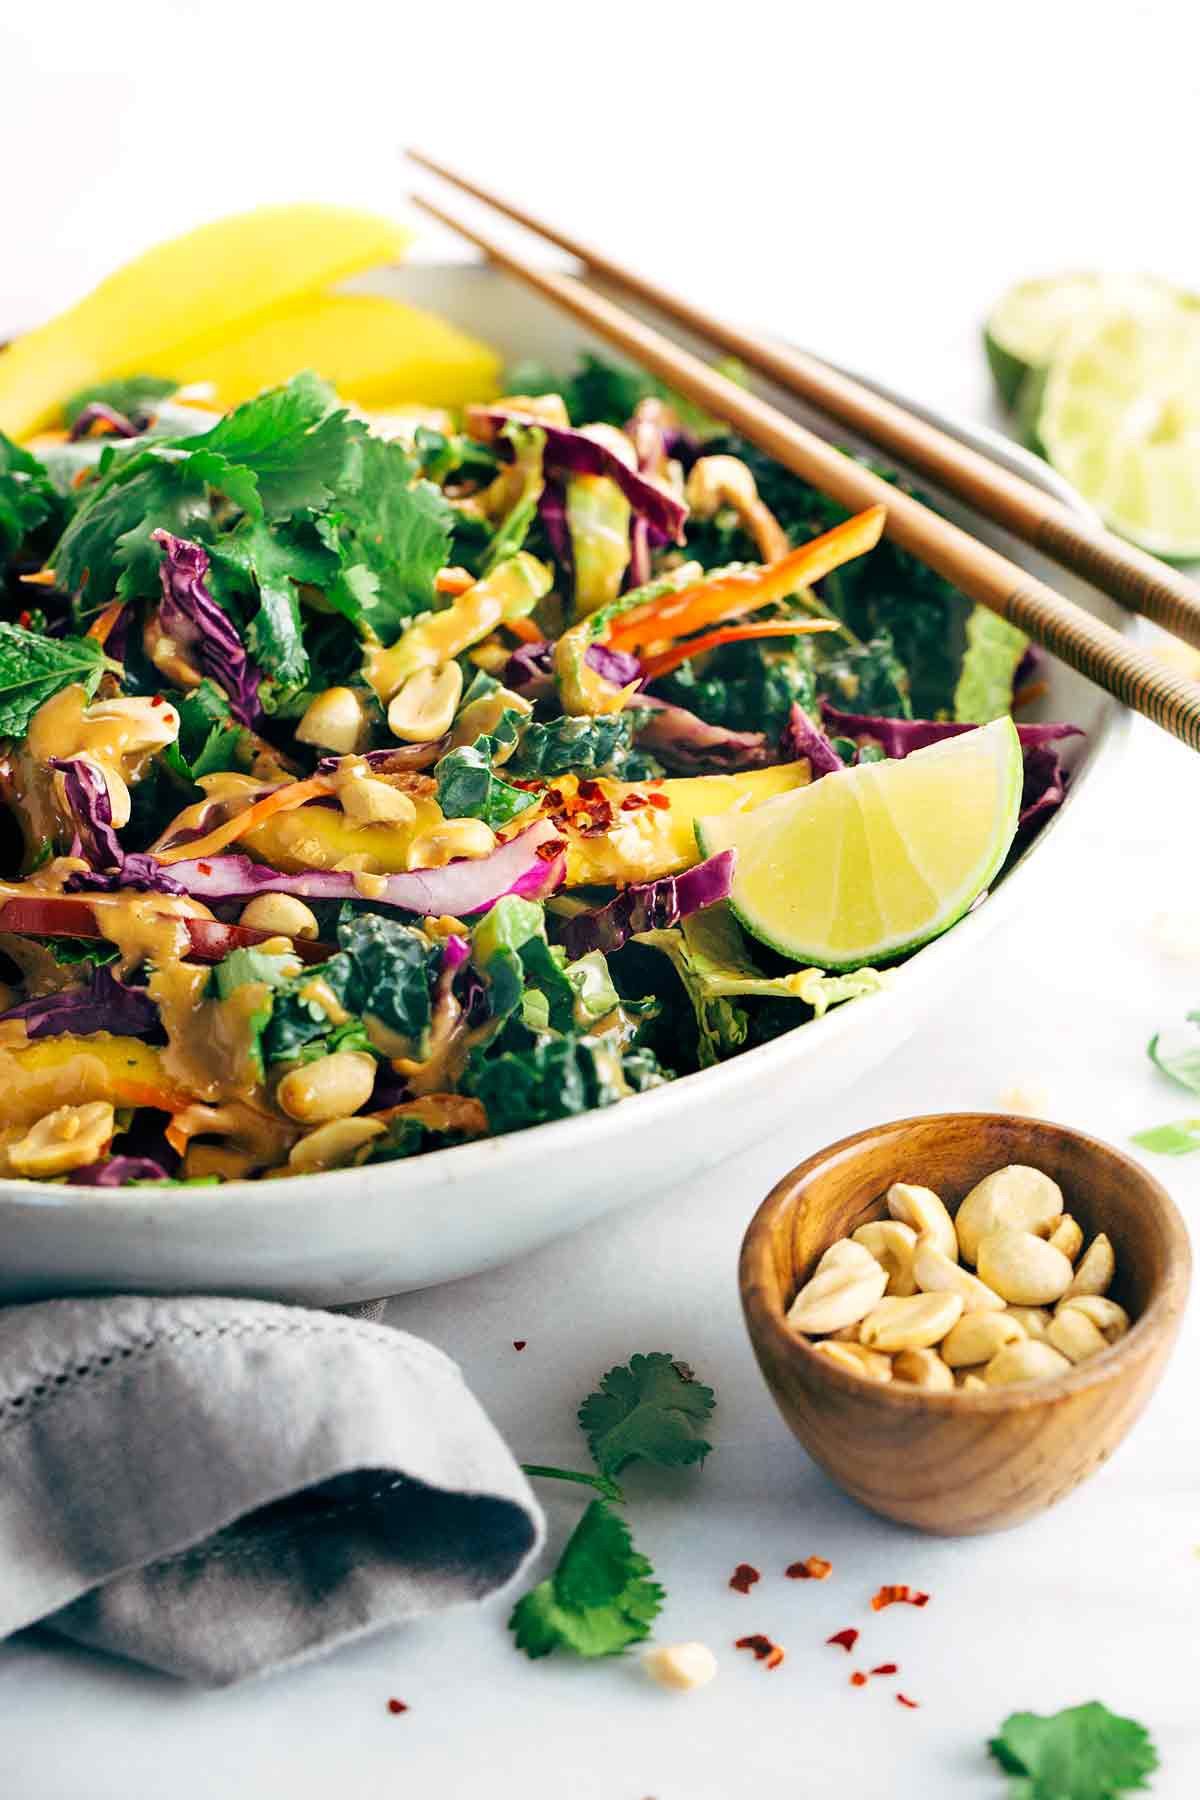 Cruciferous Vegetables Class + Crunchy Thai Salad with Peanut Dressing Demo